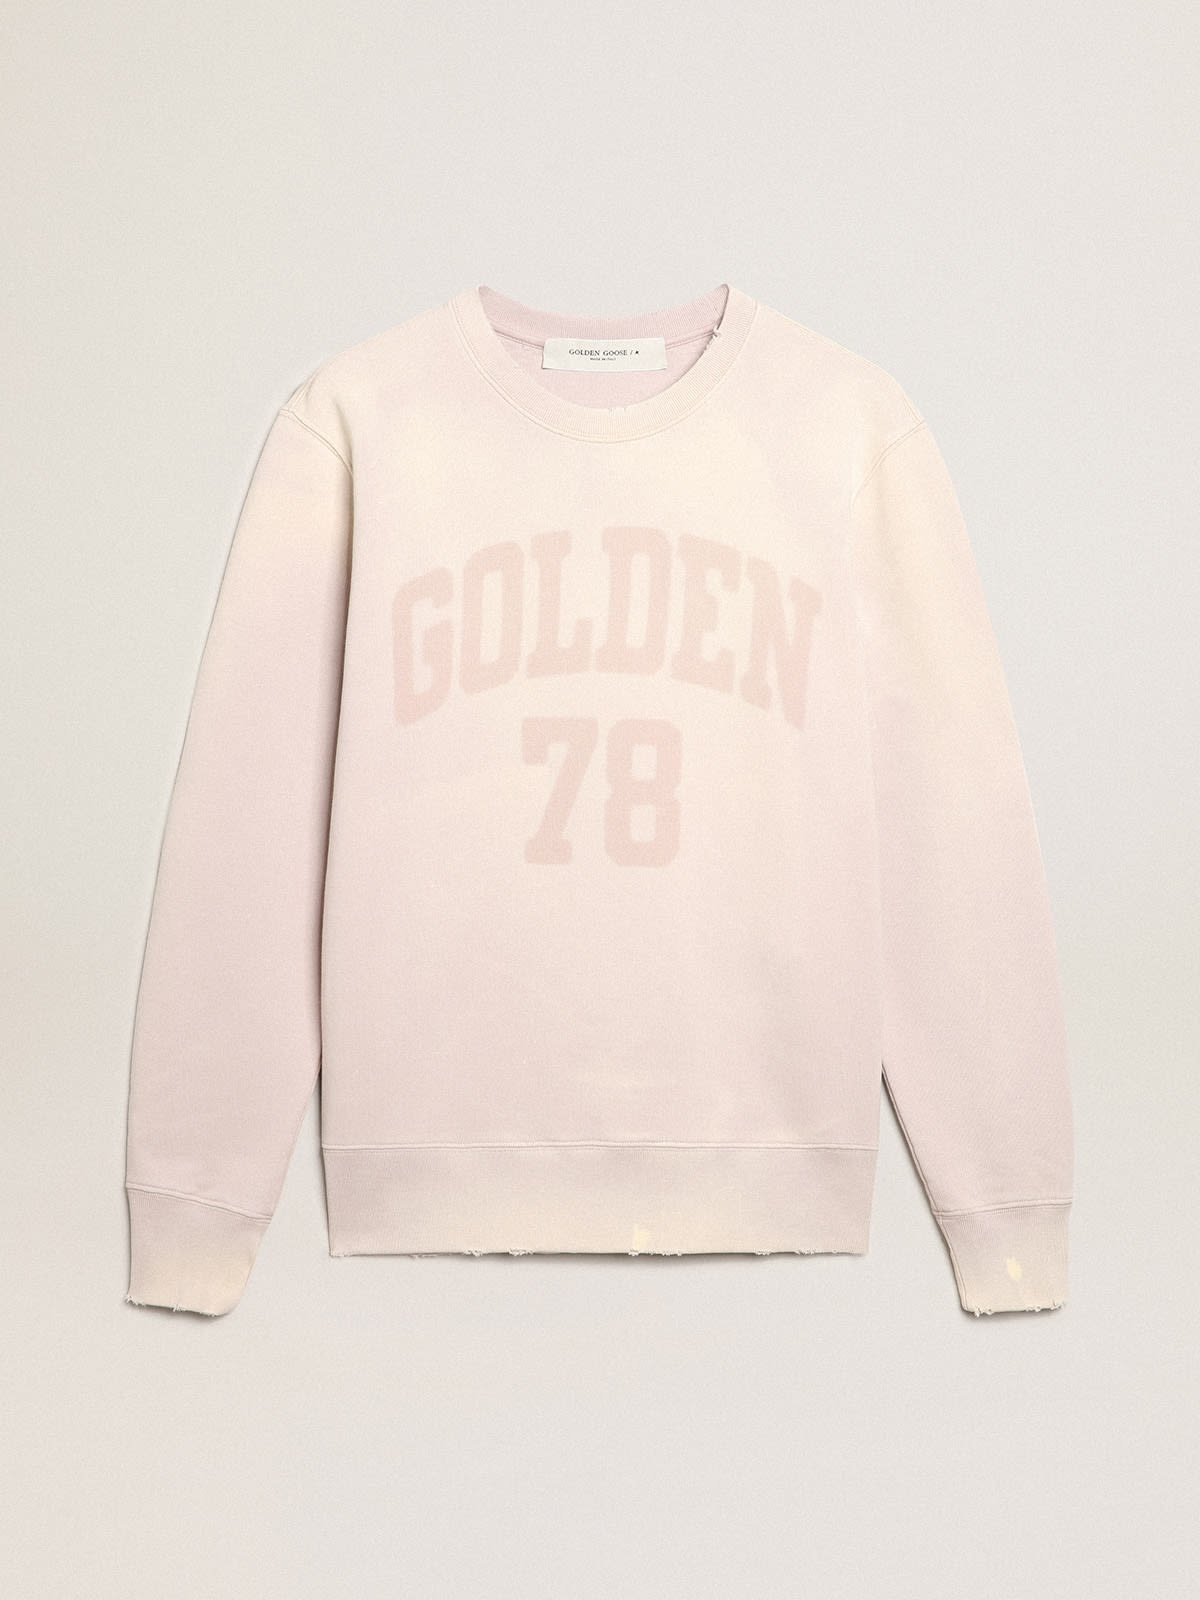 Distressed-finish pale pink sweatshirt - 1